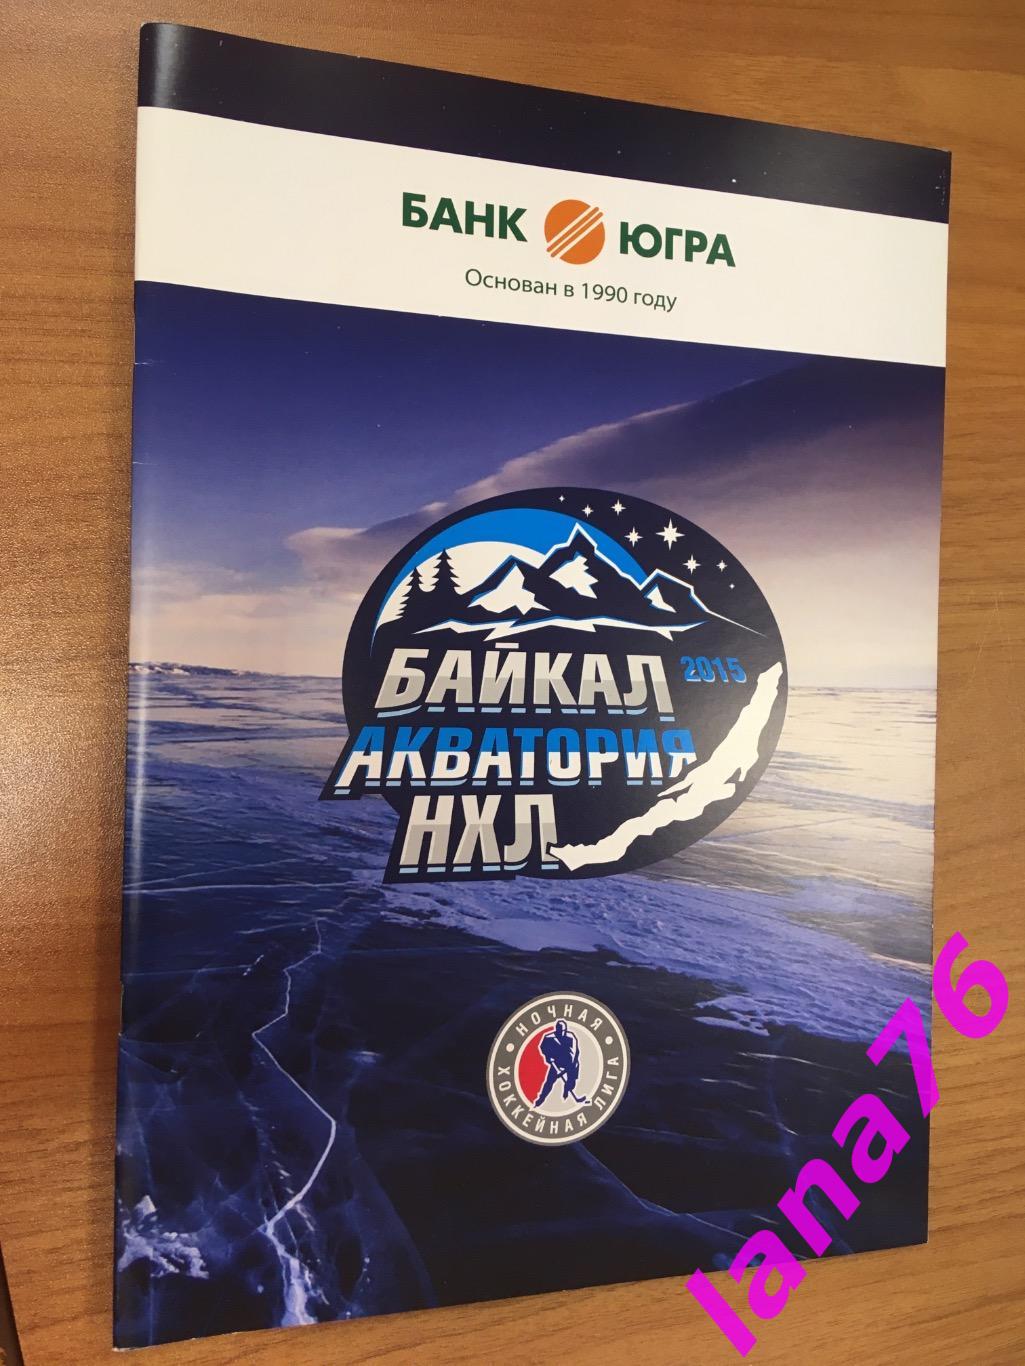 Неоплан Екатеринбург - Труа-Ривьер Канада Байкал акватория НХЛ 21-23.02.2015